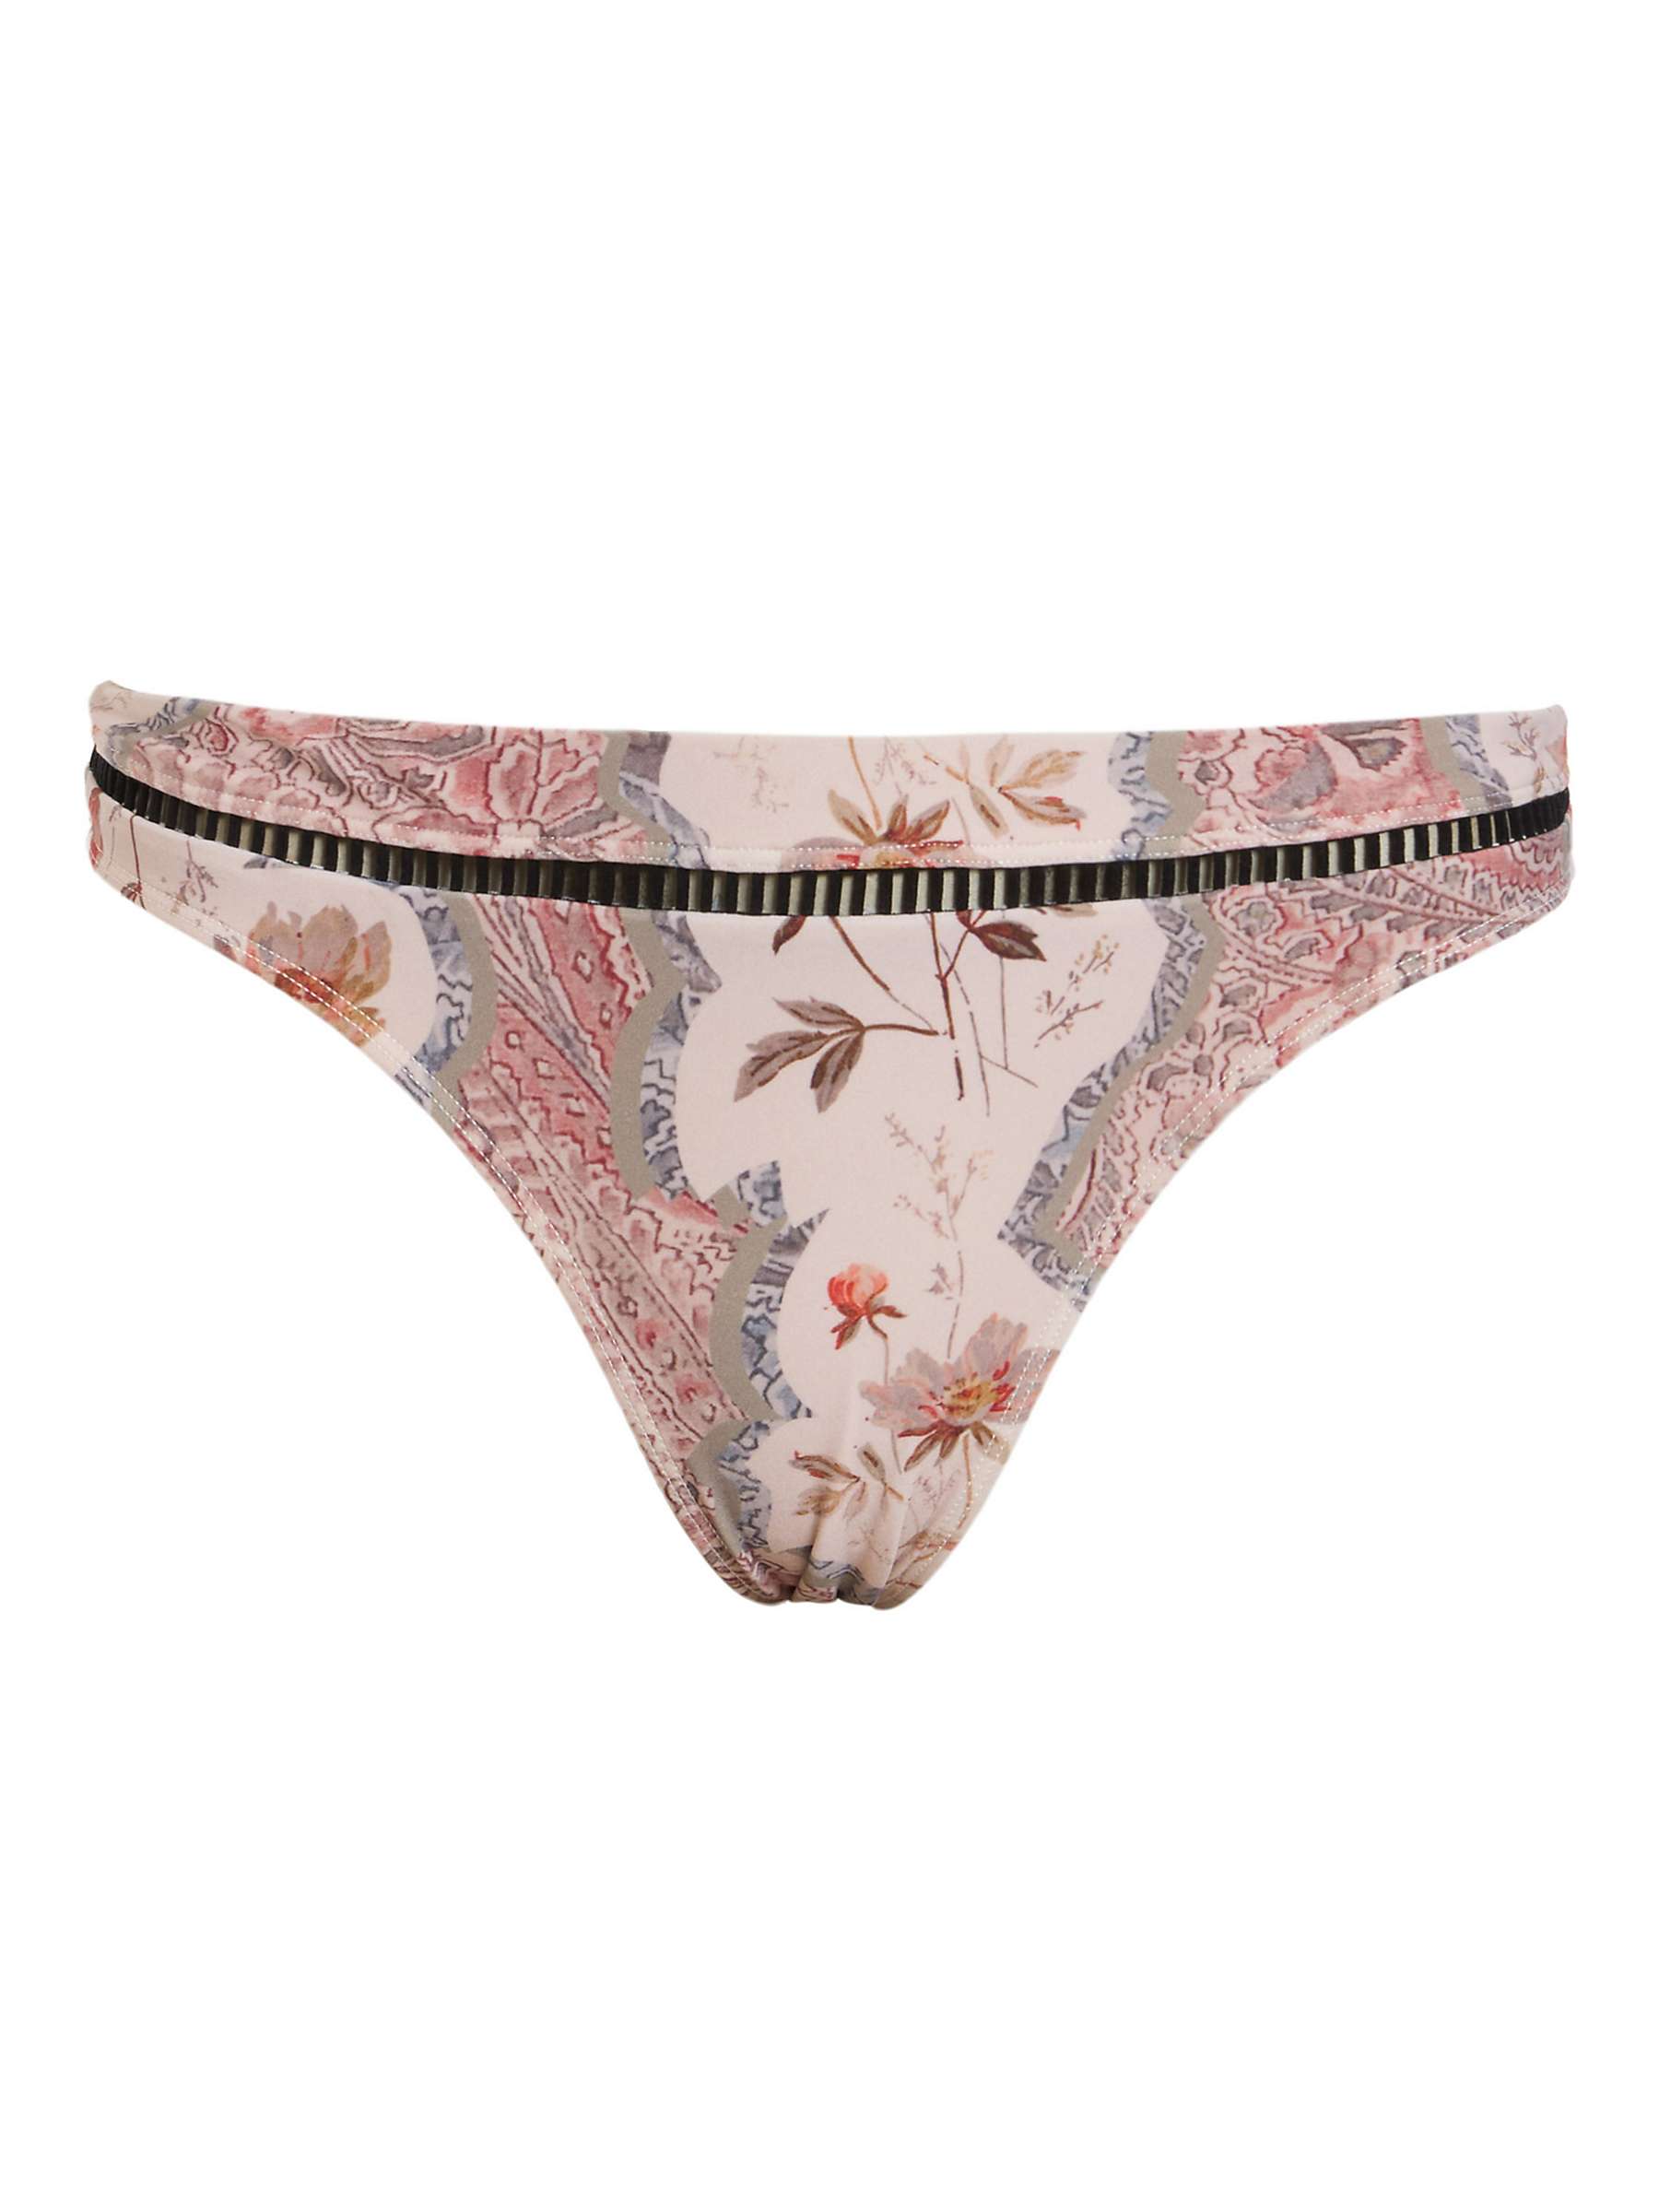 Buy AllSaints Gorah Floral Print Bikini Bottoms, Cascade Clay Pink/Multi Online at johnlewis.com